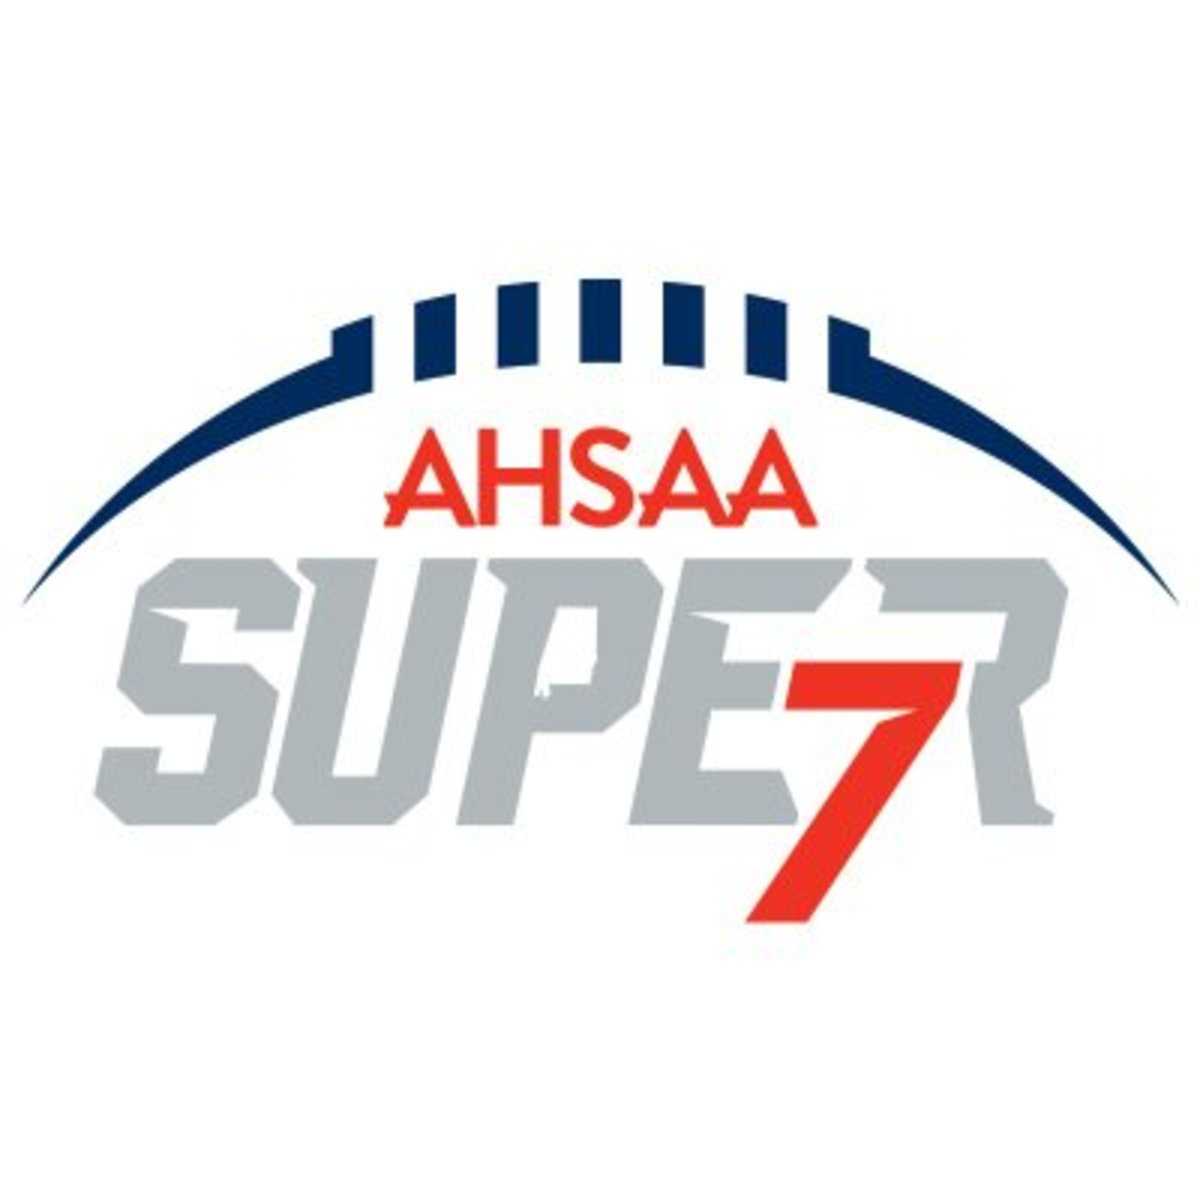 AHSAA Super 7 logo